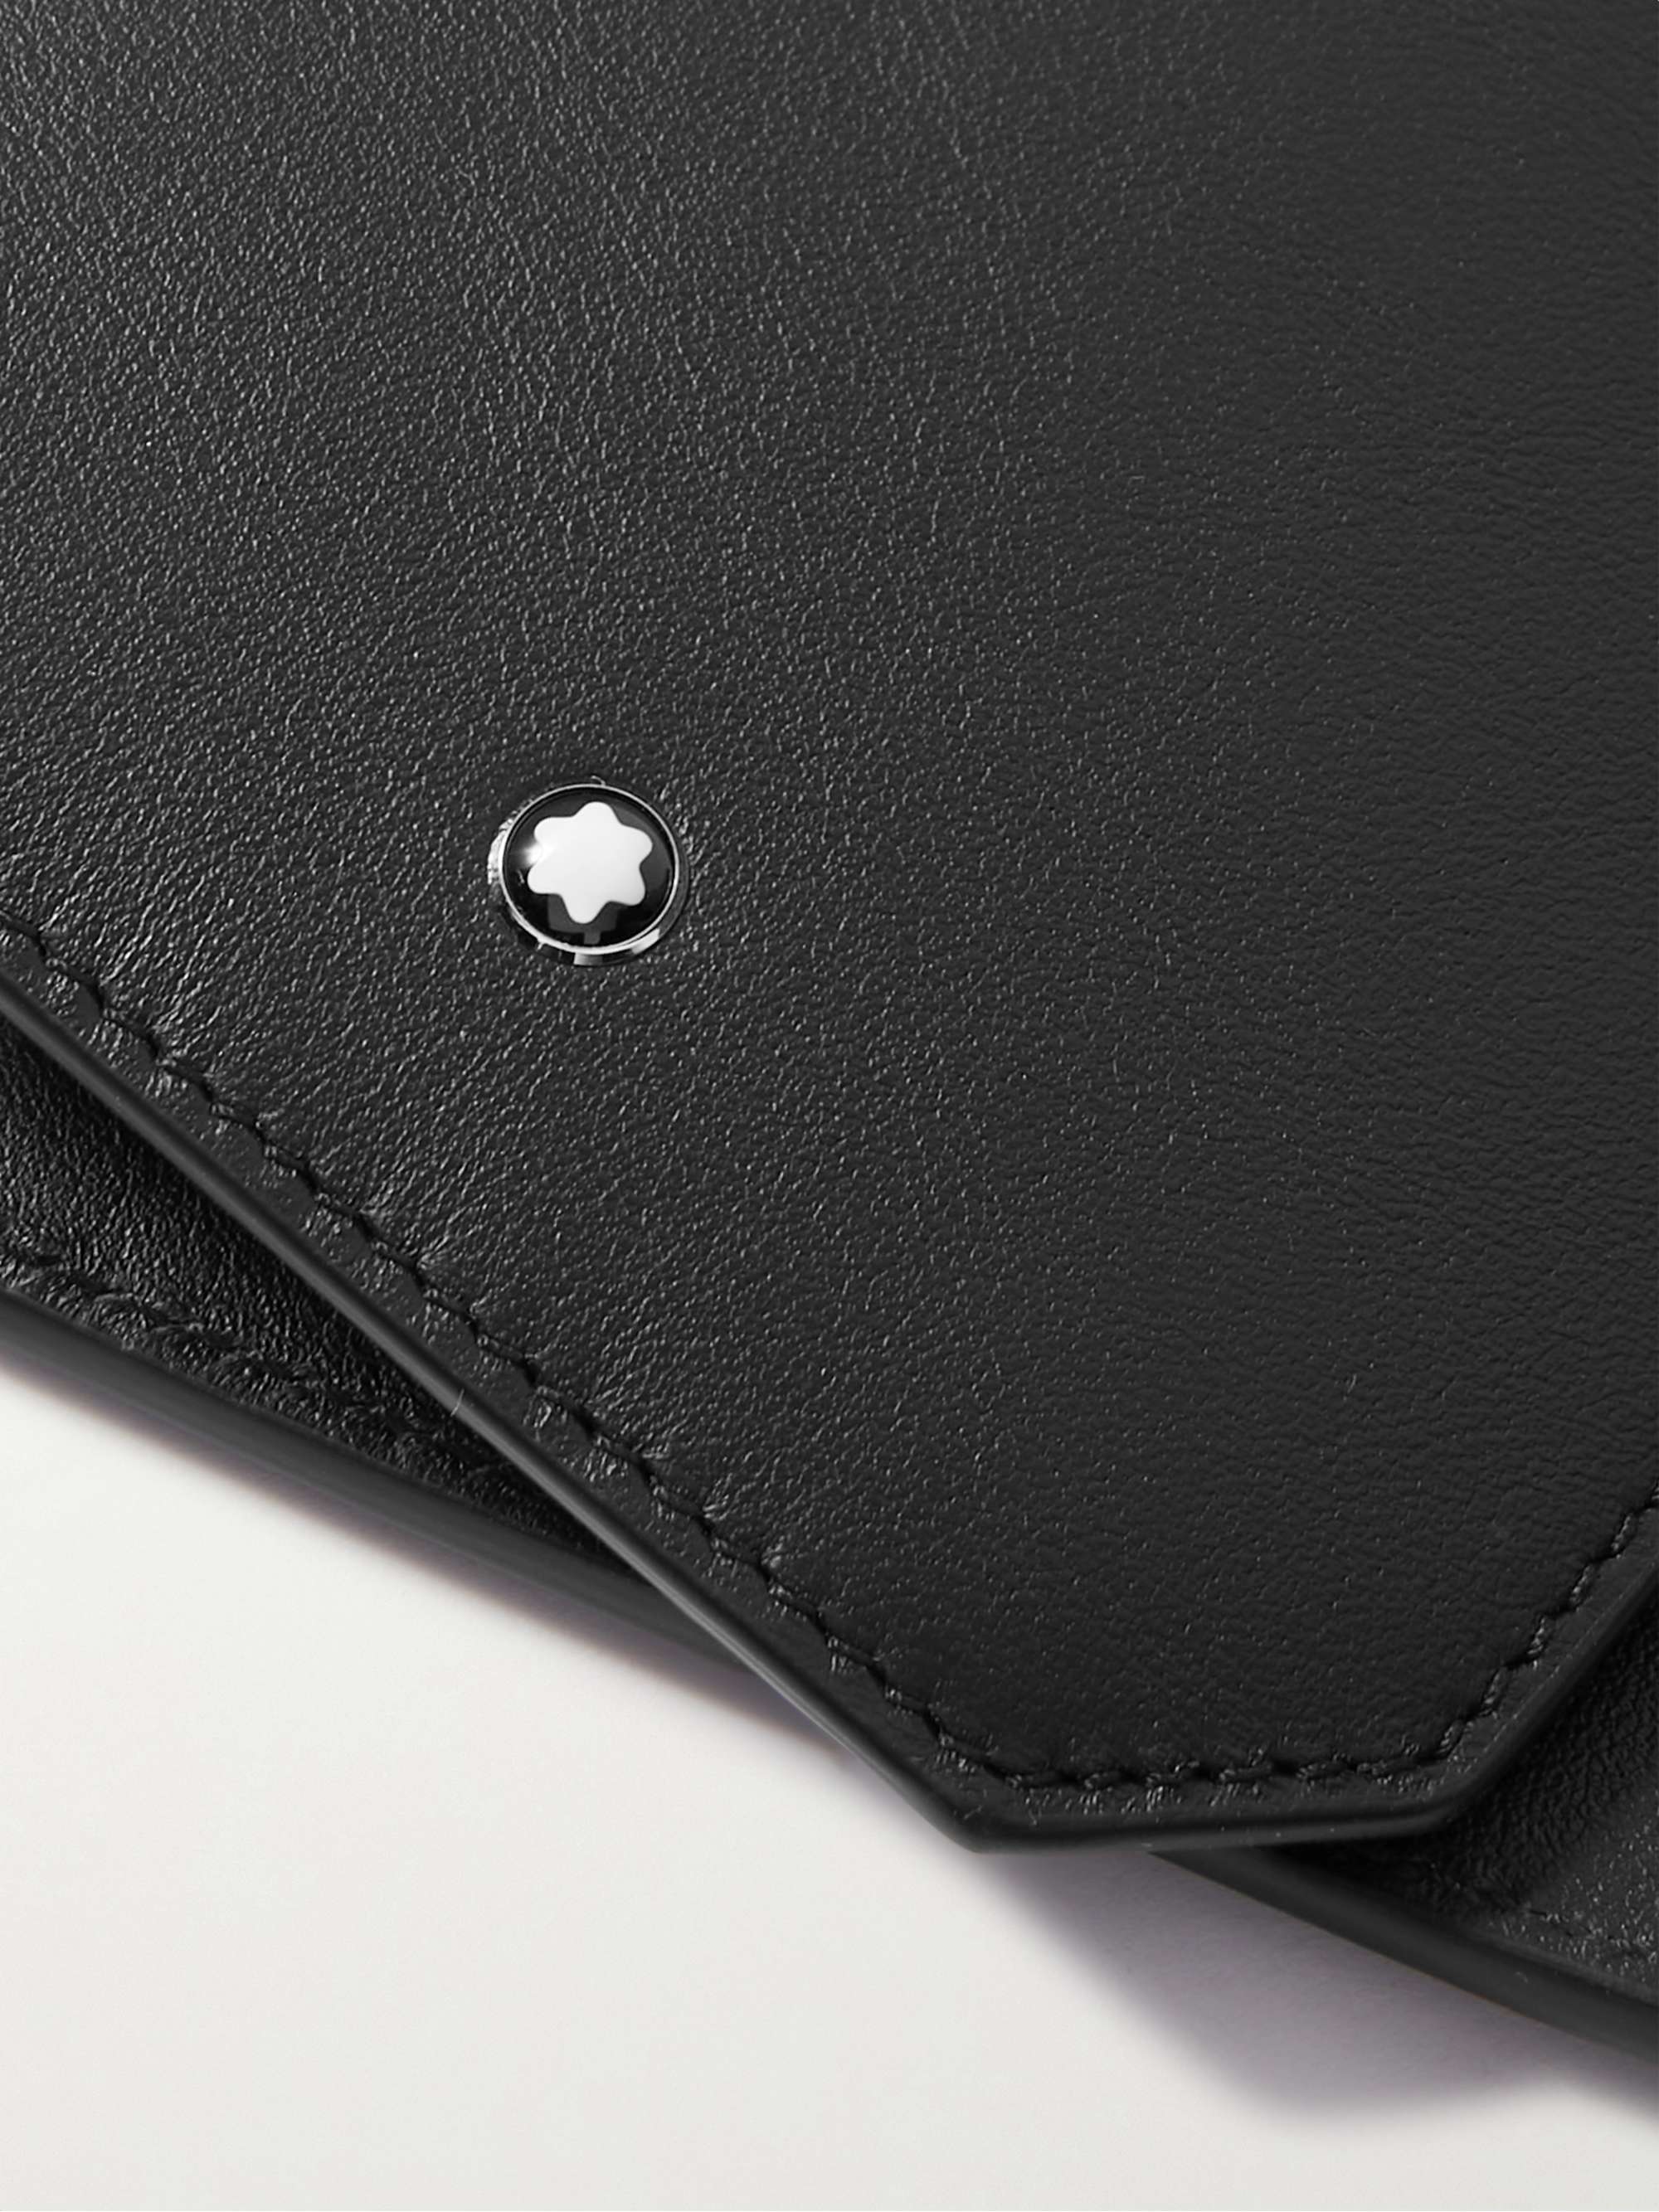 MONTBLANC Meisterstück Leather Billfold Wallet with Lanyard